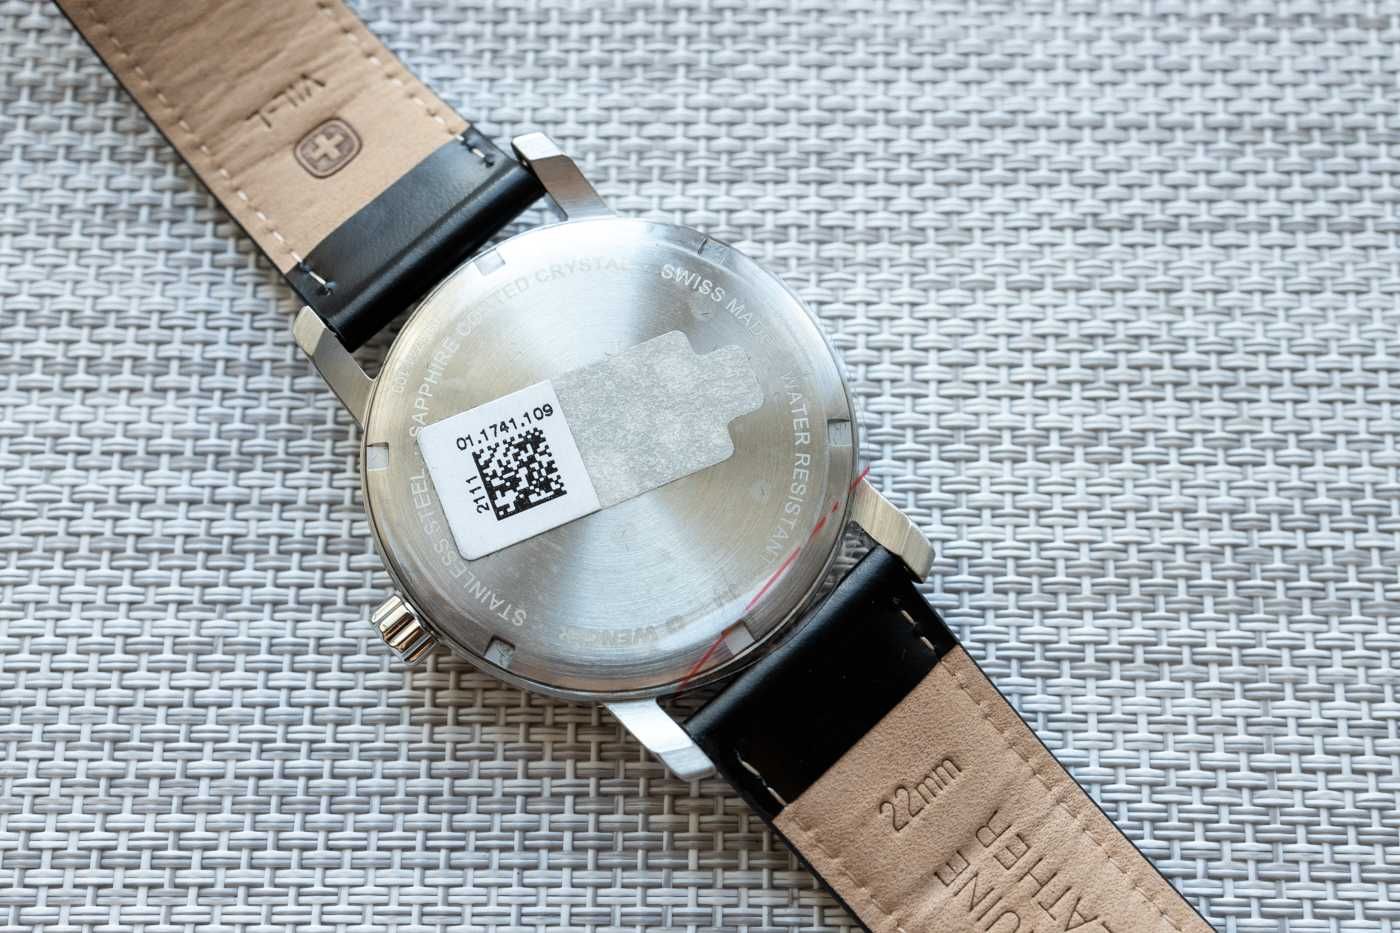 Наручные часы Wenger Urban Classic (Swiss Made) - модные и элегантные